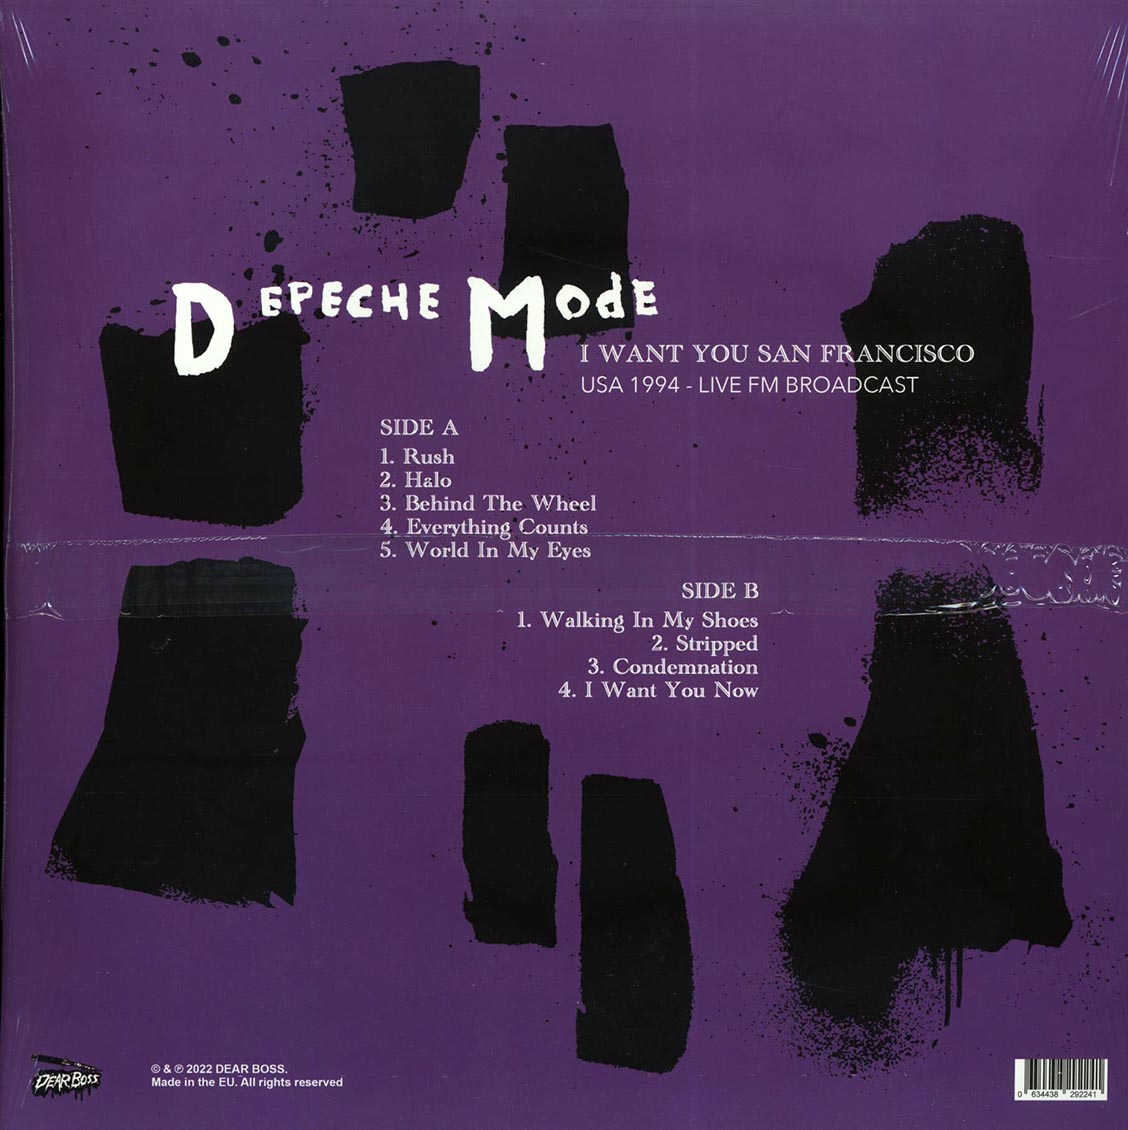 Depeche Mode - I Want You San Francisco: USA 1994 Live FM Broadcast - Vinyl LP, LP